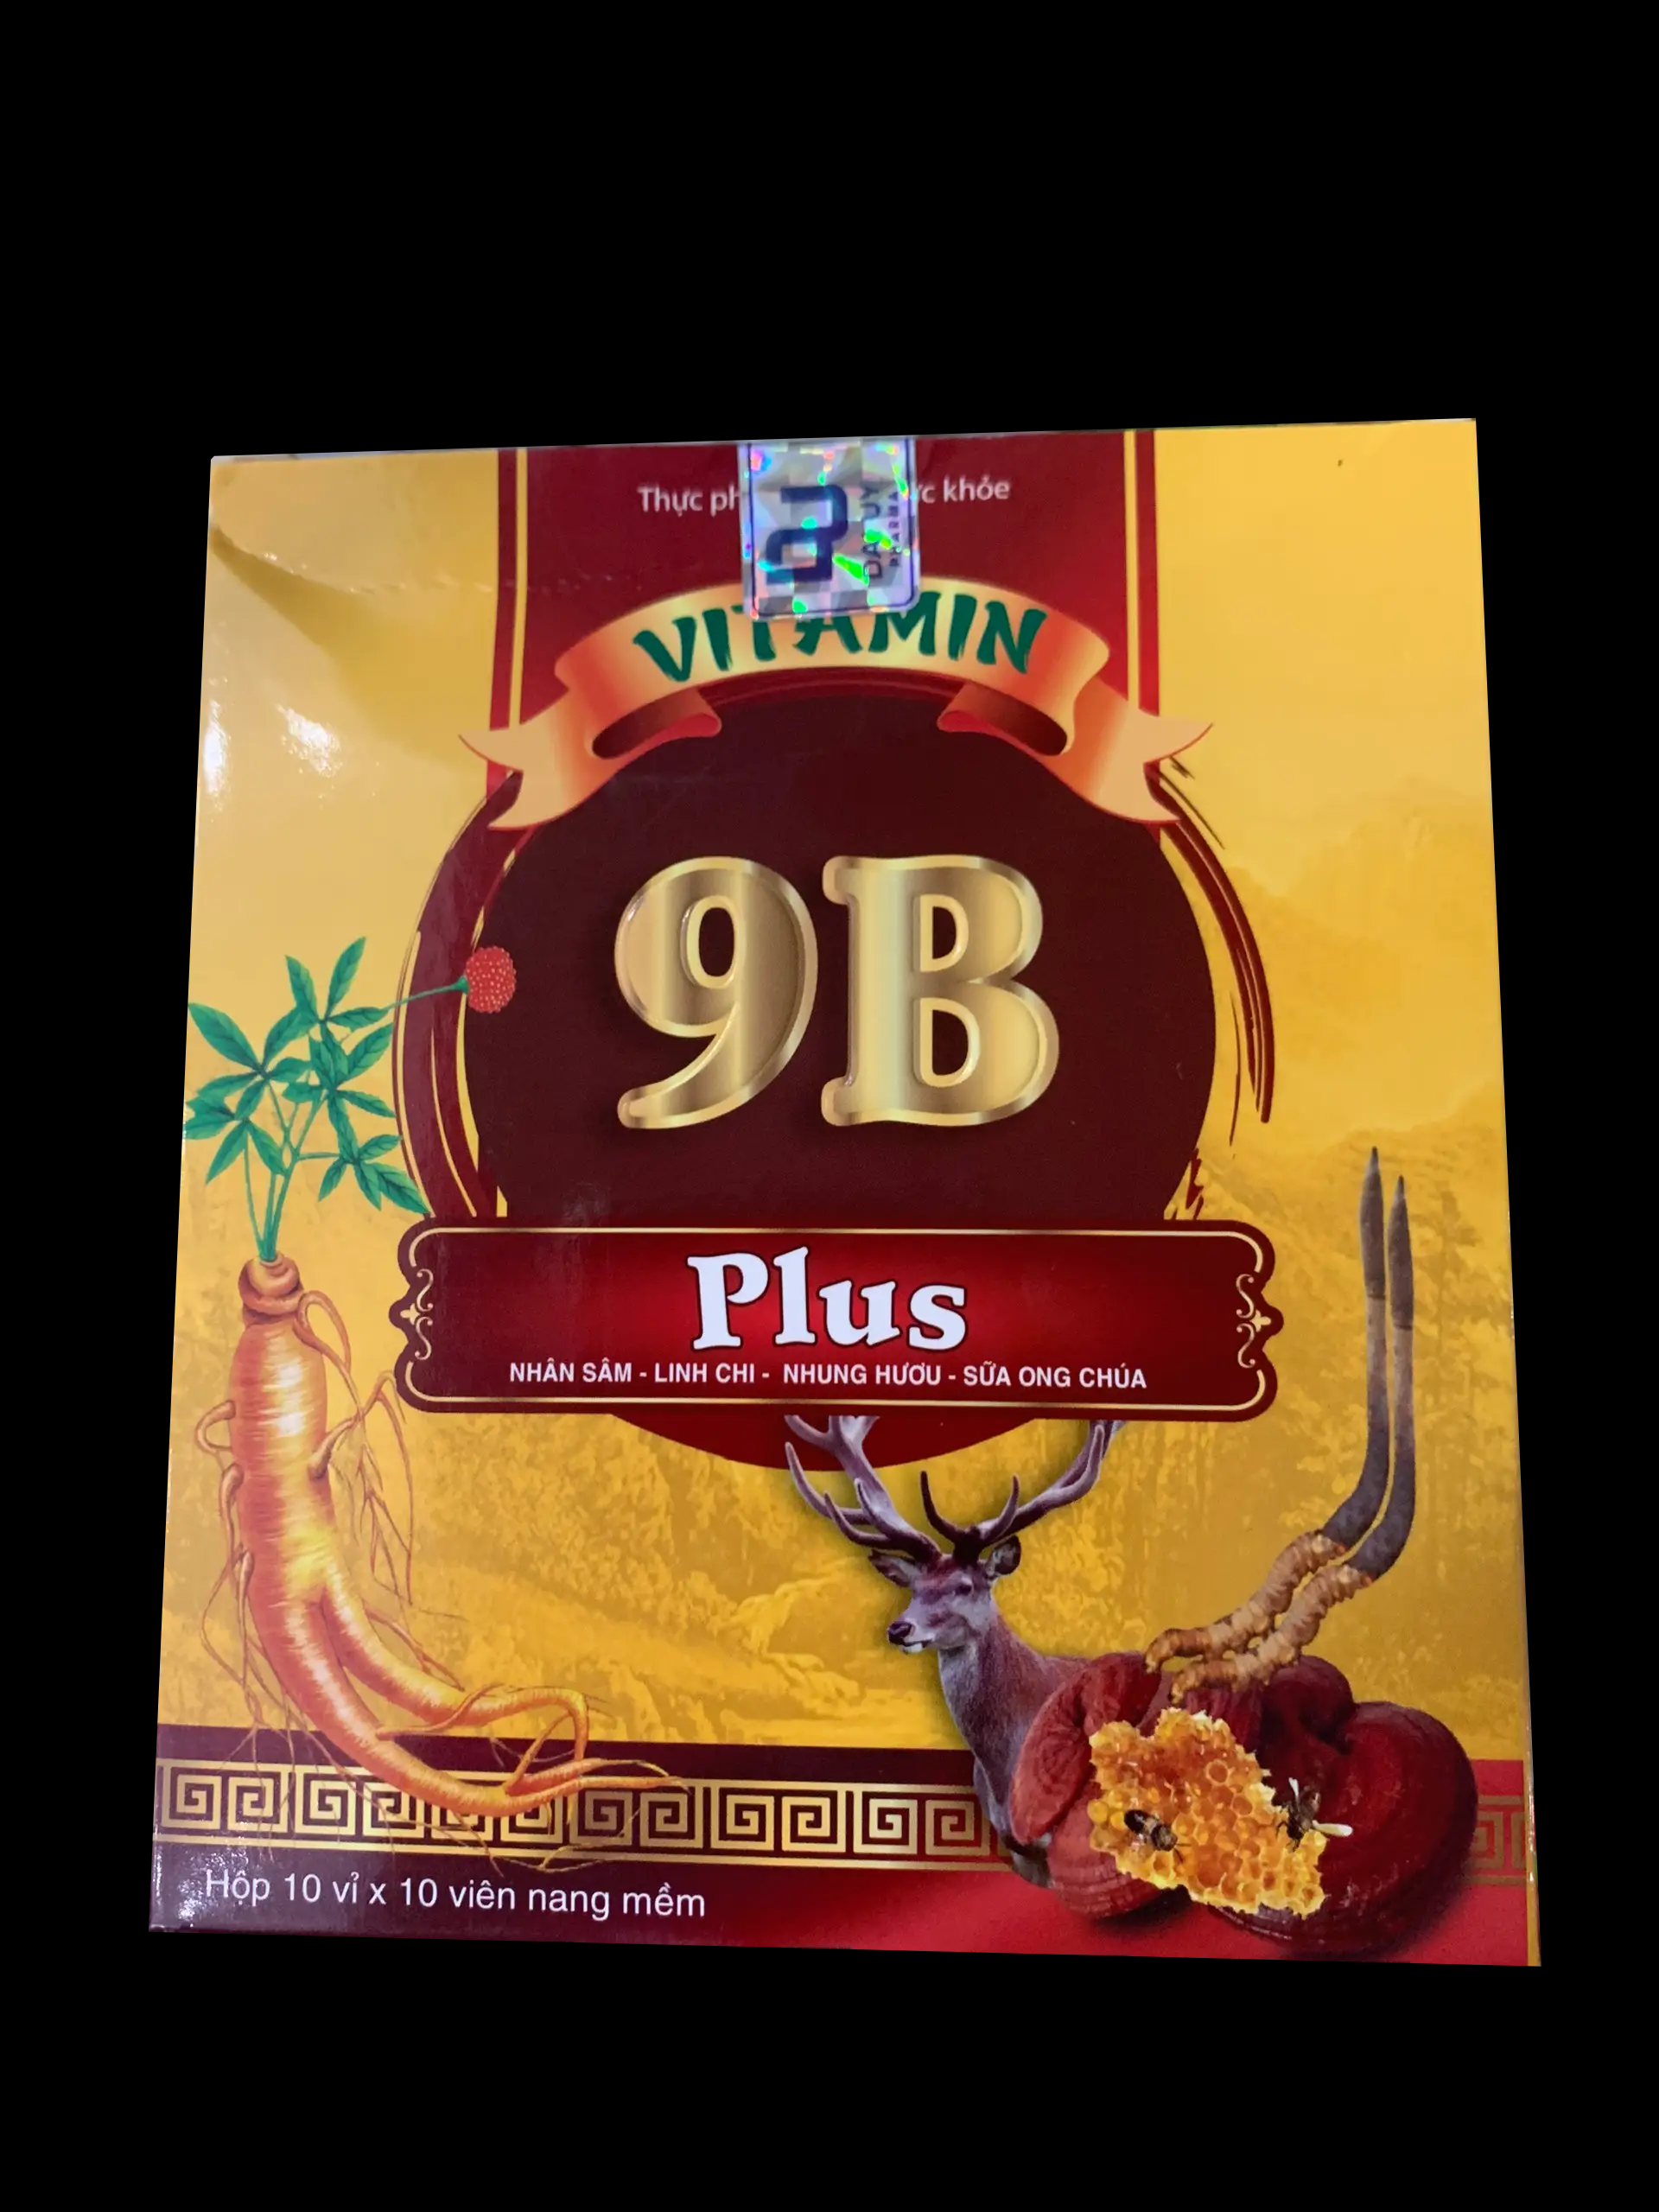 Vitamin 9B Plus Đại Uy